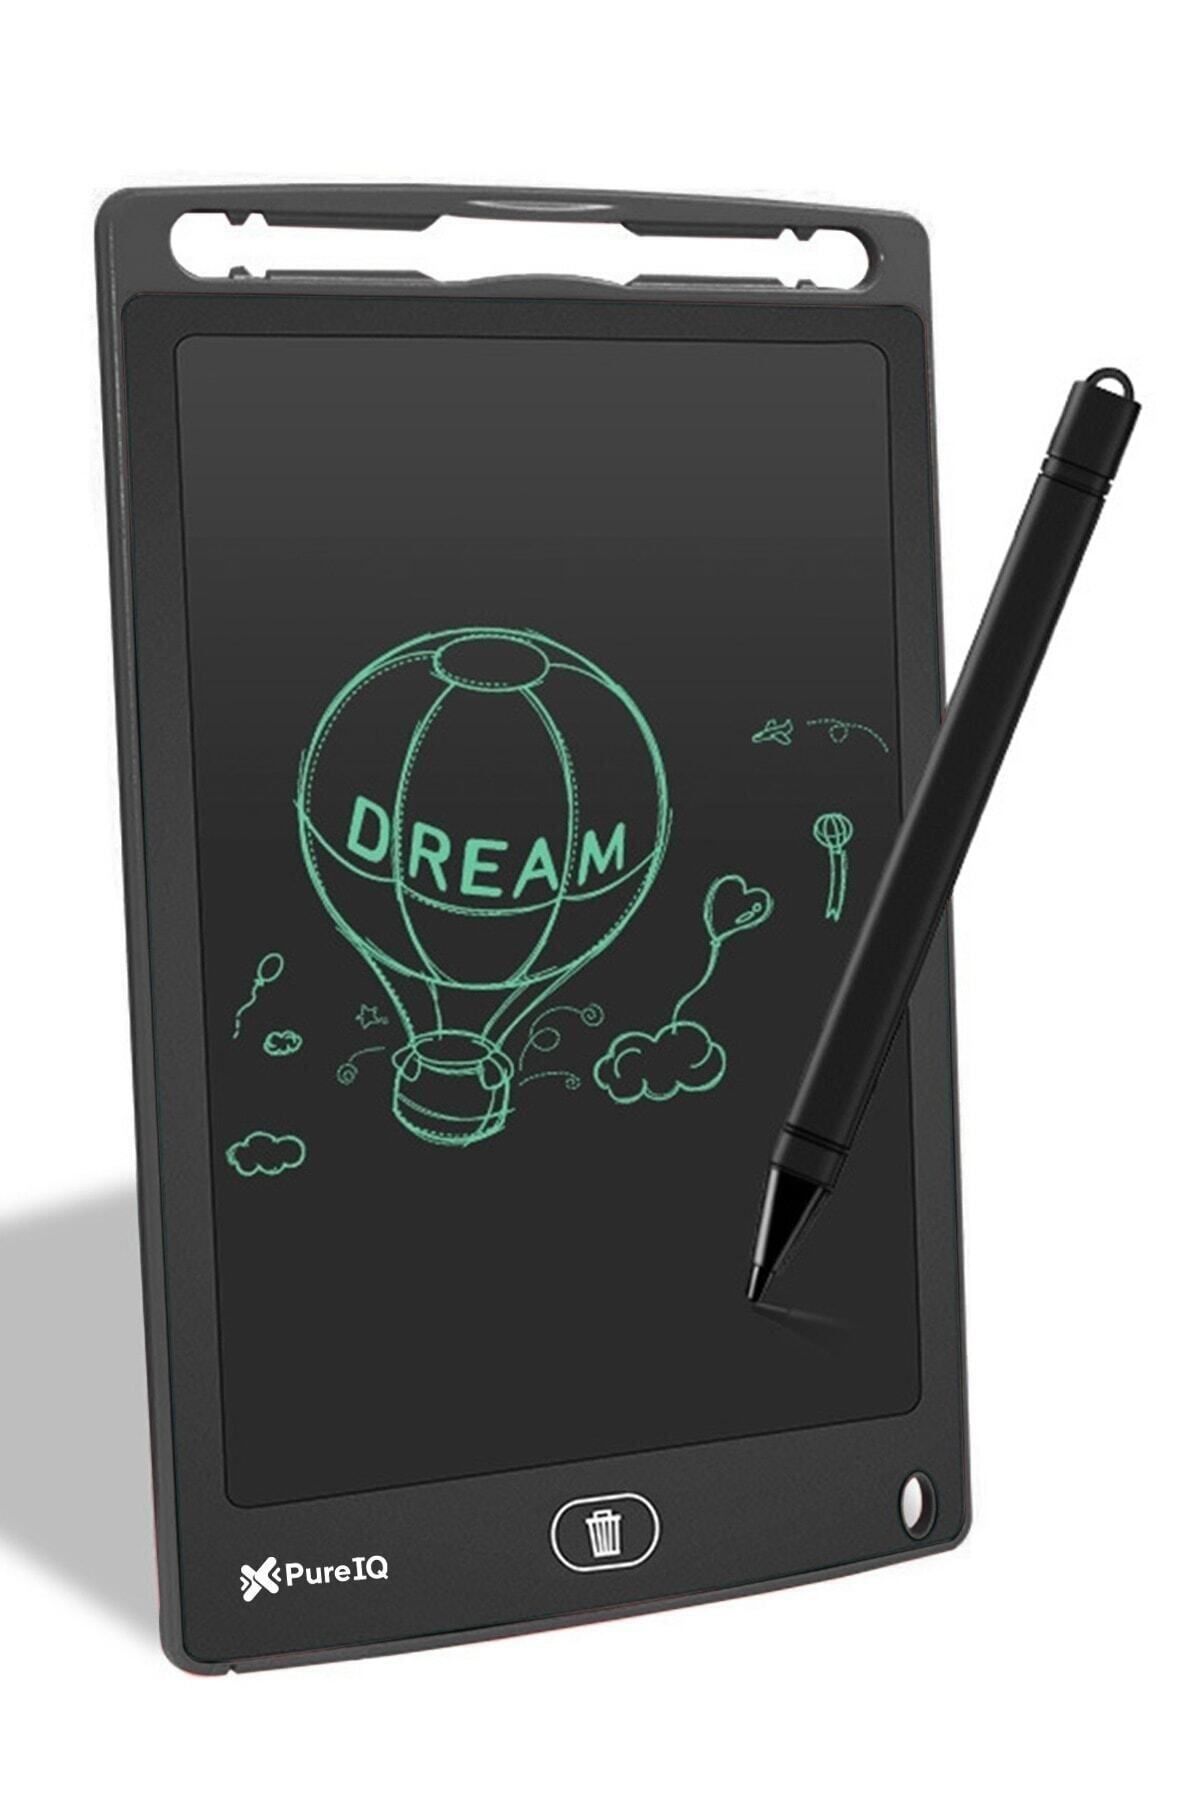 Objaks Graphics Digital Kids Tablet Drawing Tablet LCD Display Graphics 8.5 Inch Screen J.b